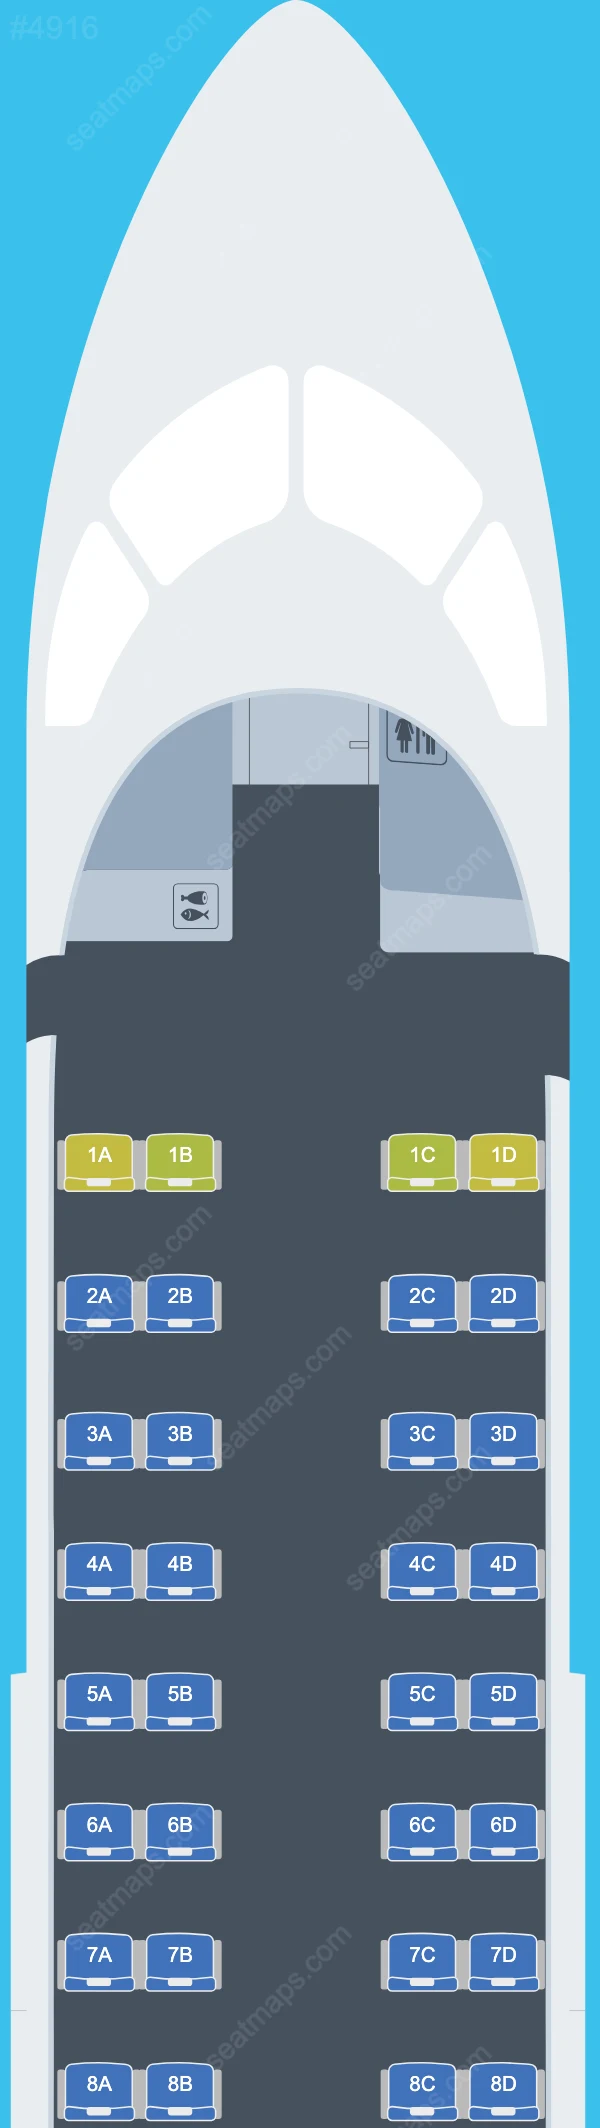 Air Creebec Bombardier Q300 Seat Maps Q300